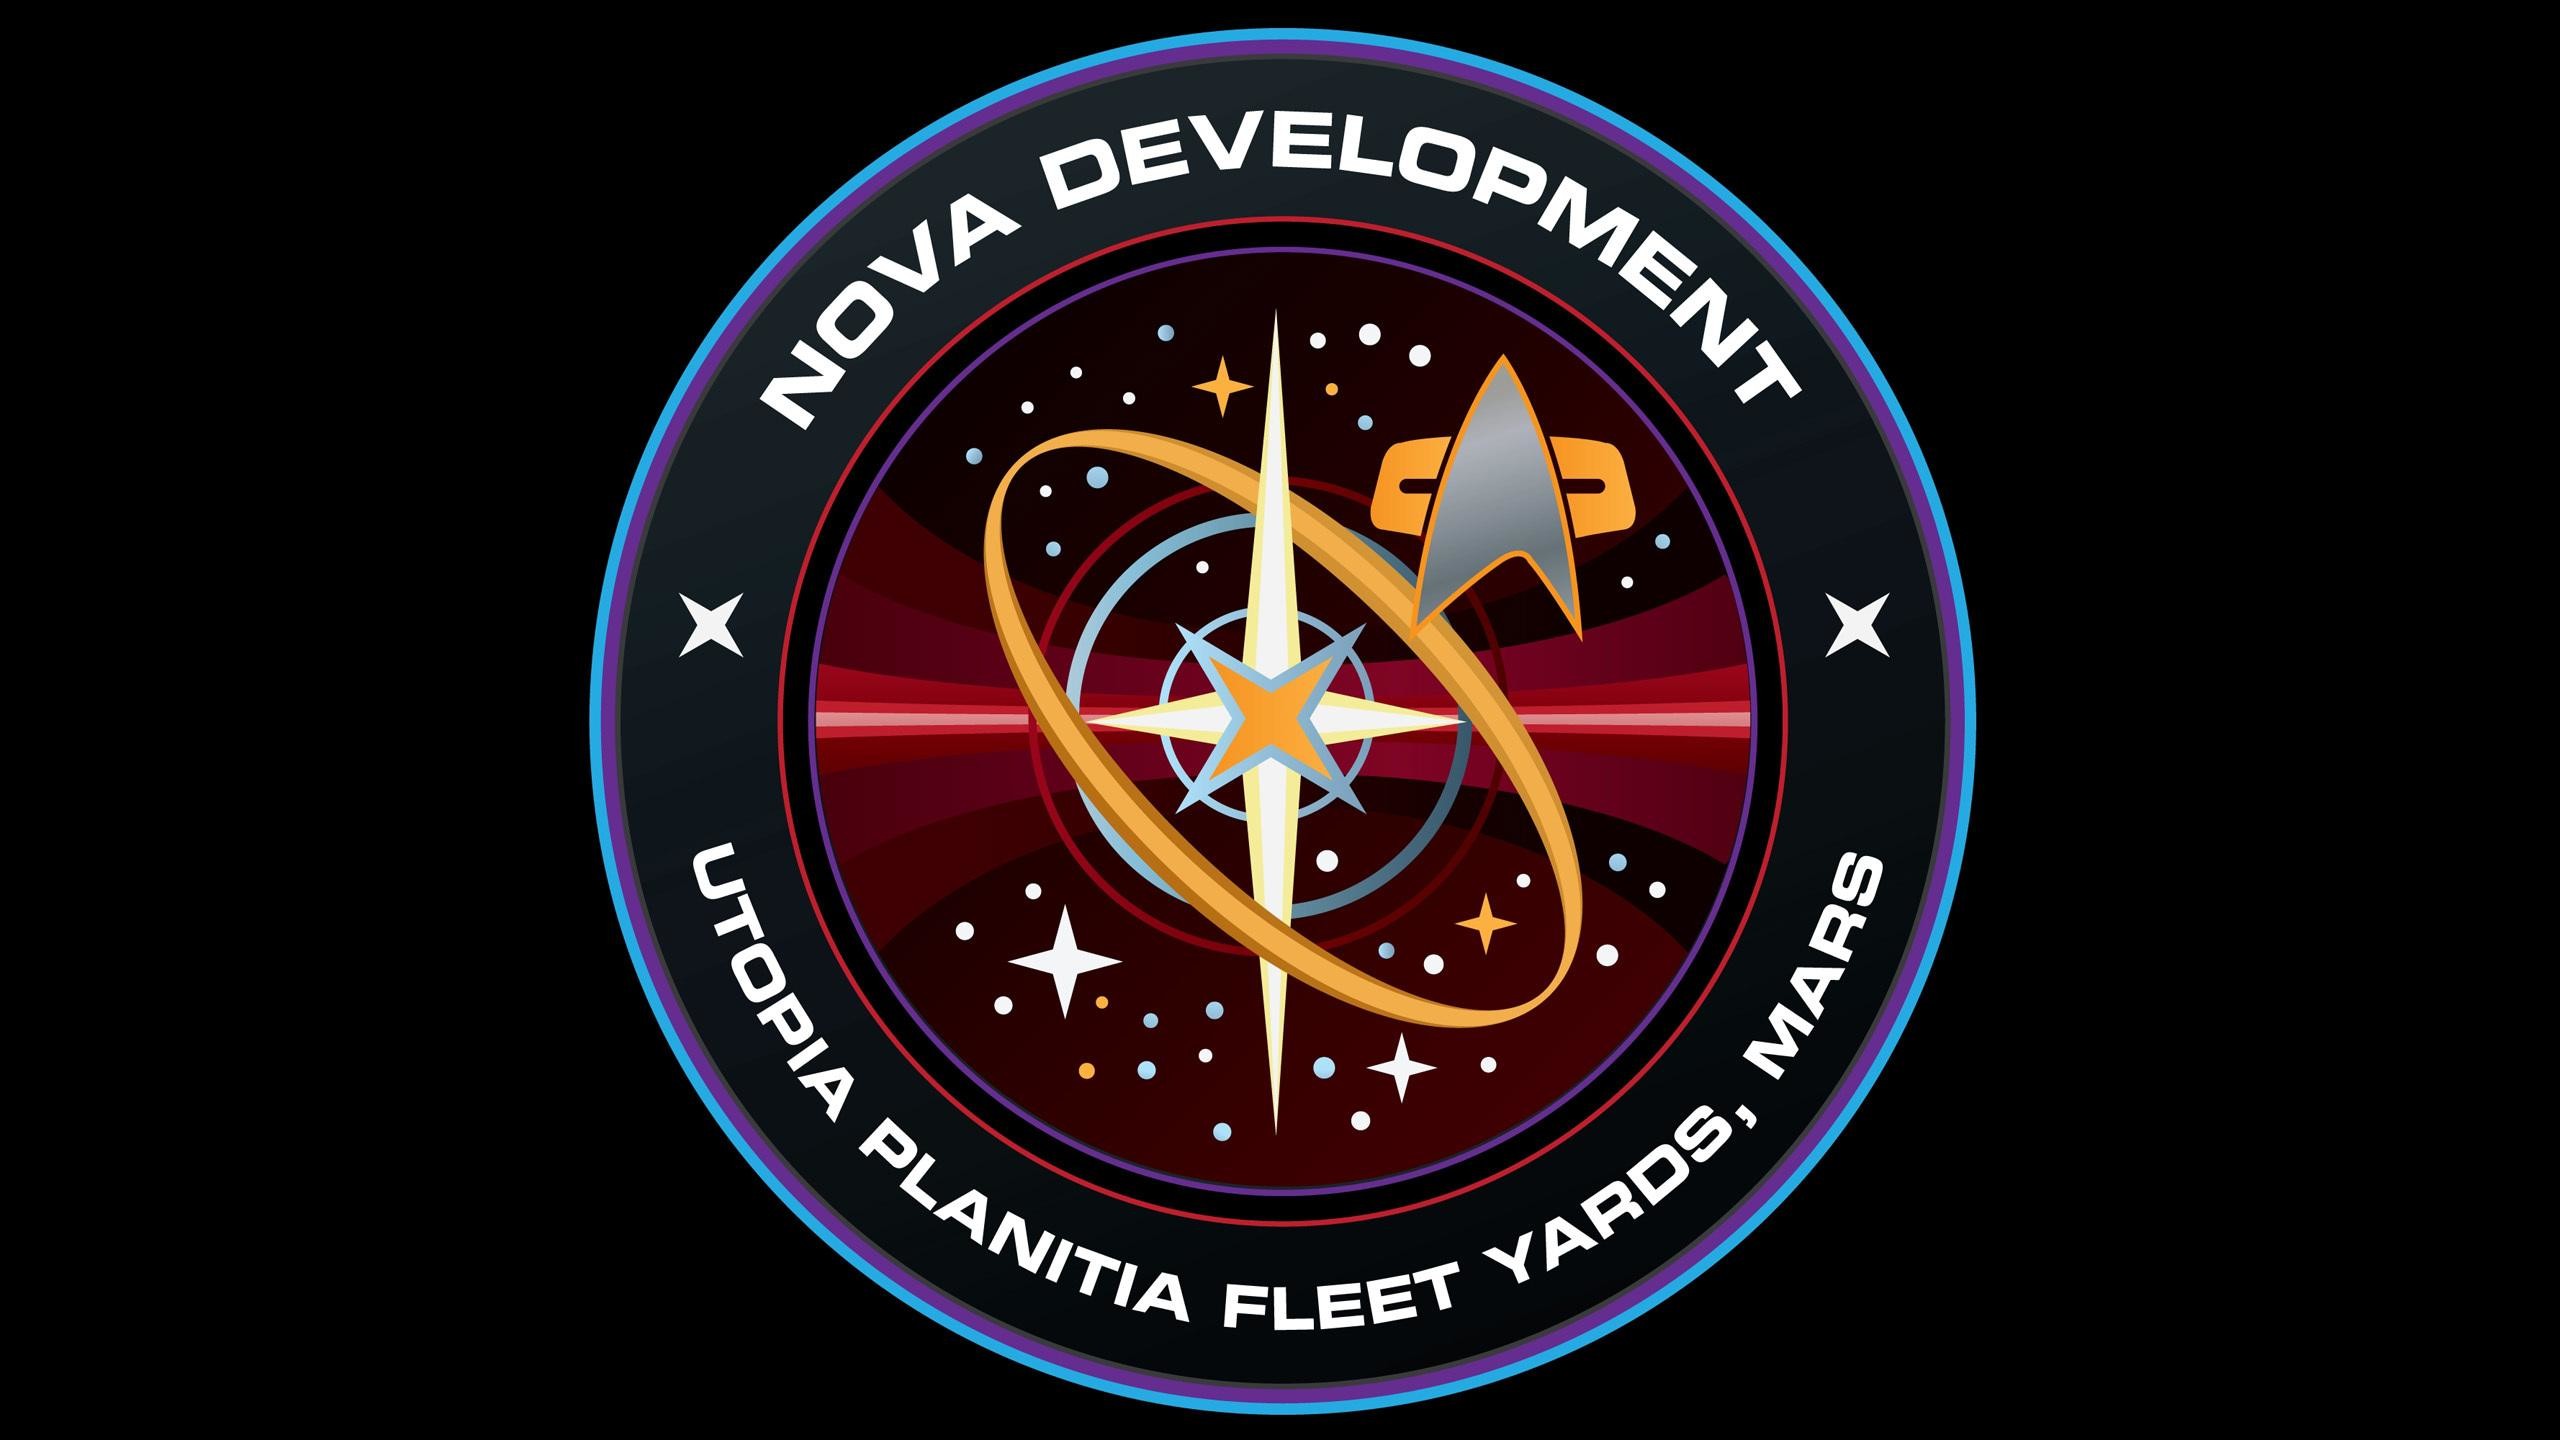 2560x1440 Star Trek with Nova Development